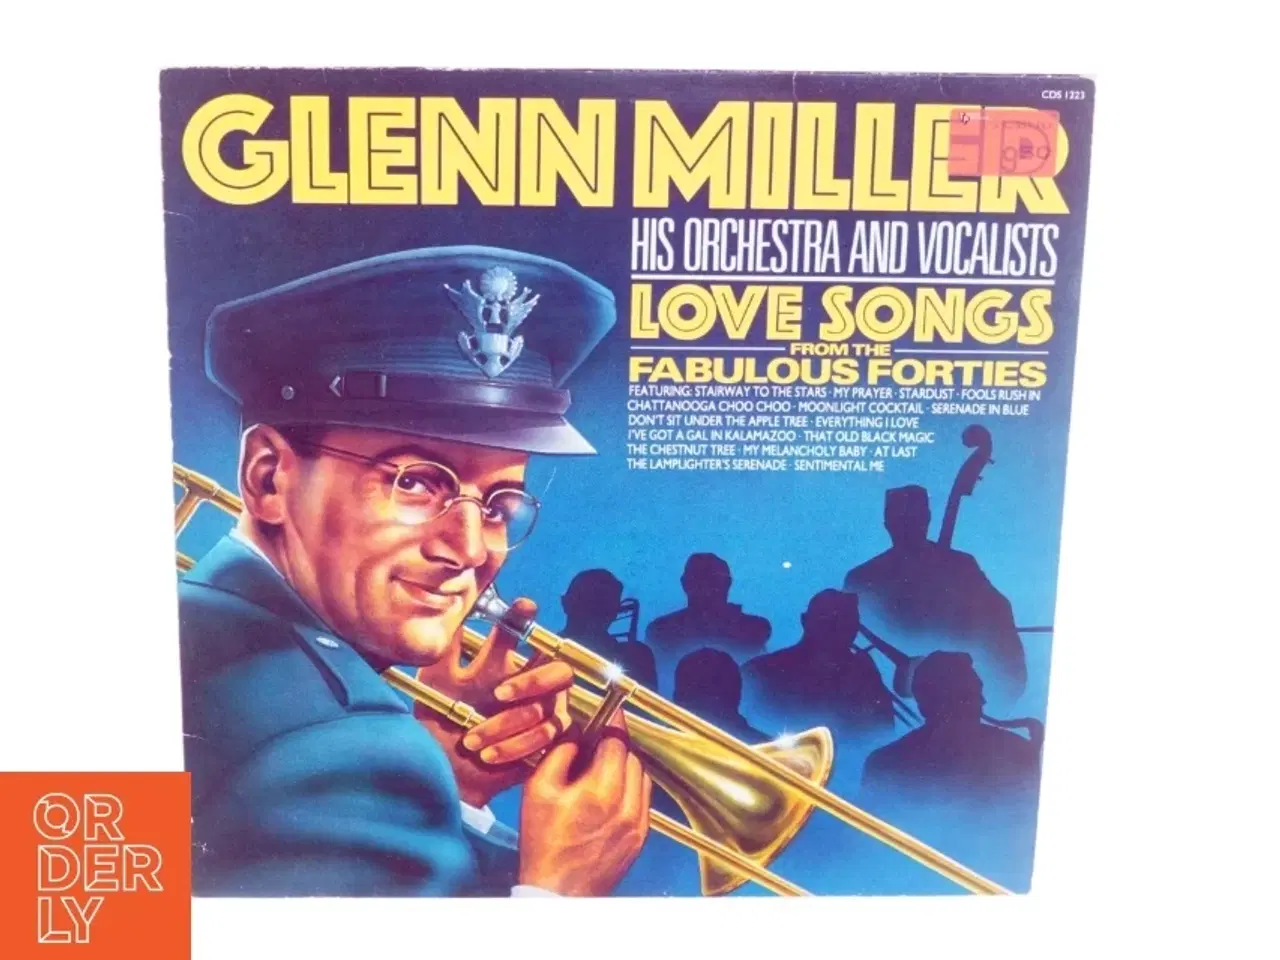 Billede 1 - "Love songs from the fabulous forties" af Glenn Miller